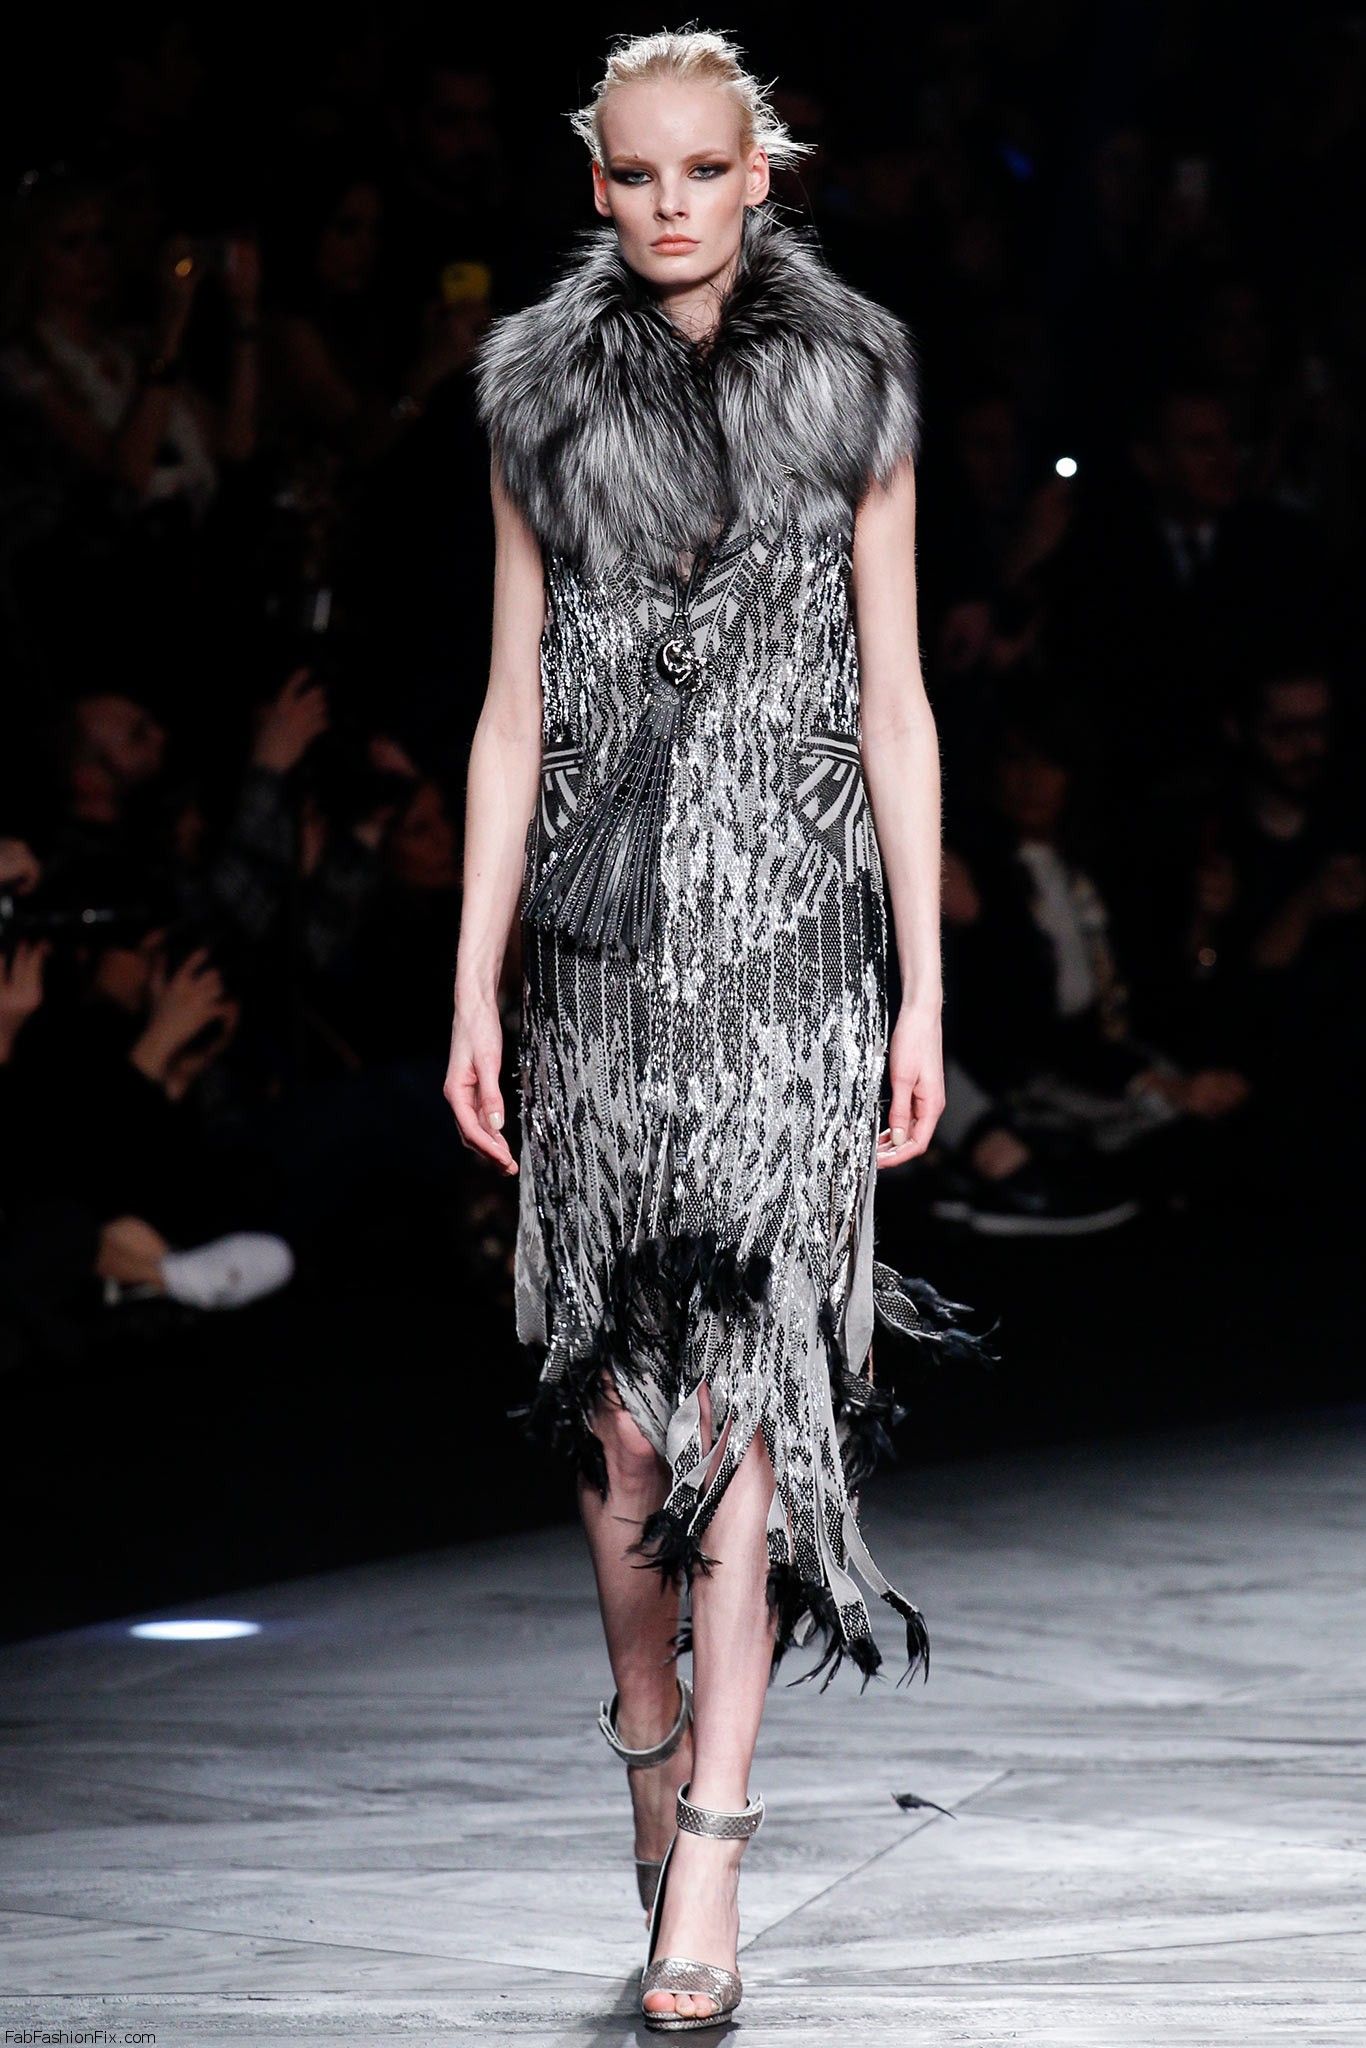 Roberto Cavalli fall/winter 2014 collection – Milan fashion week | Fab ...